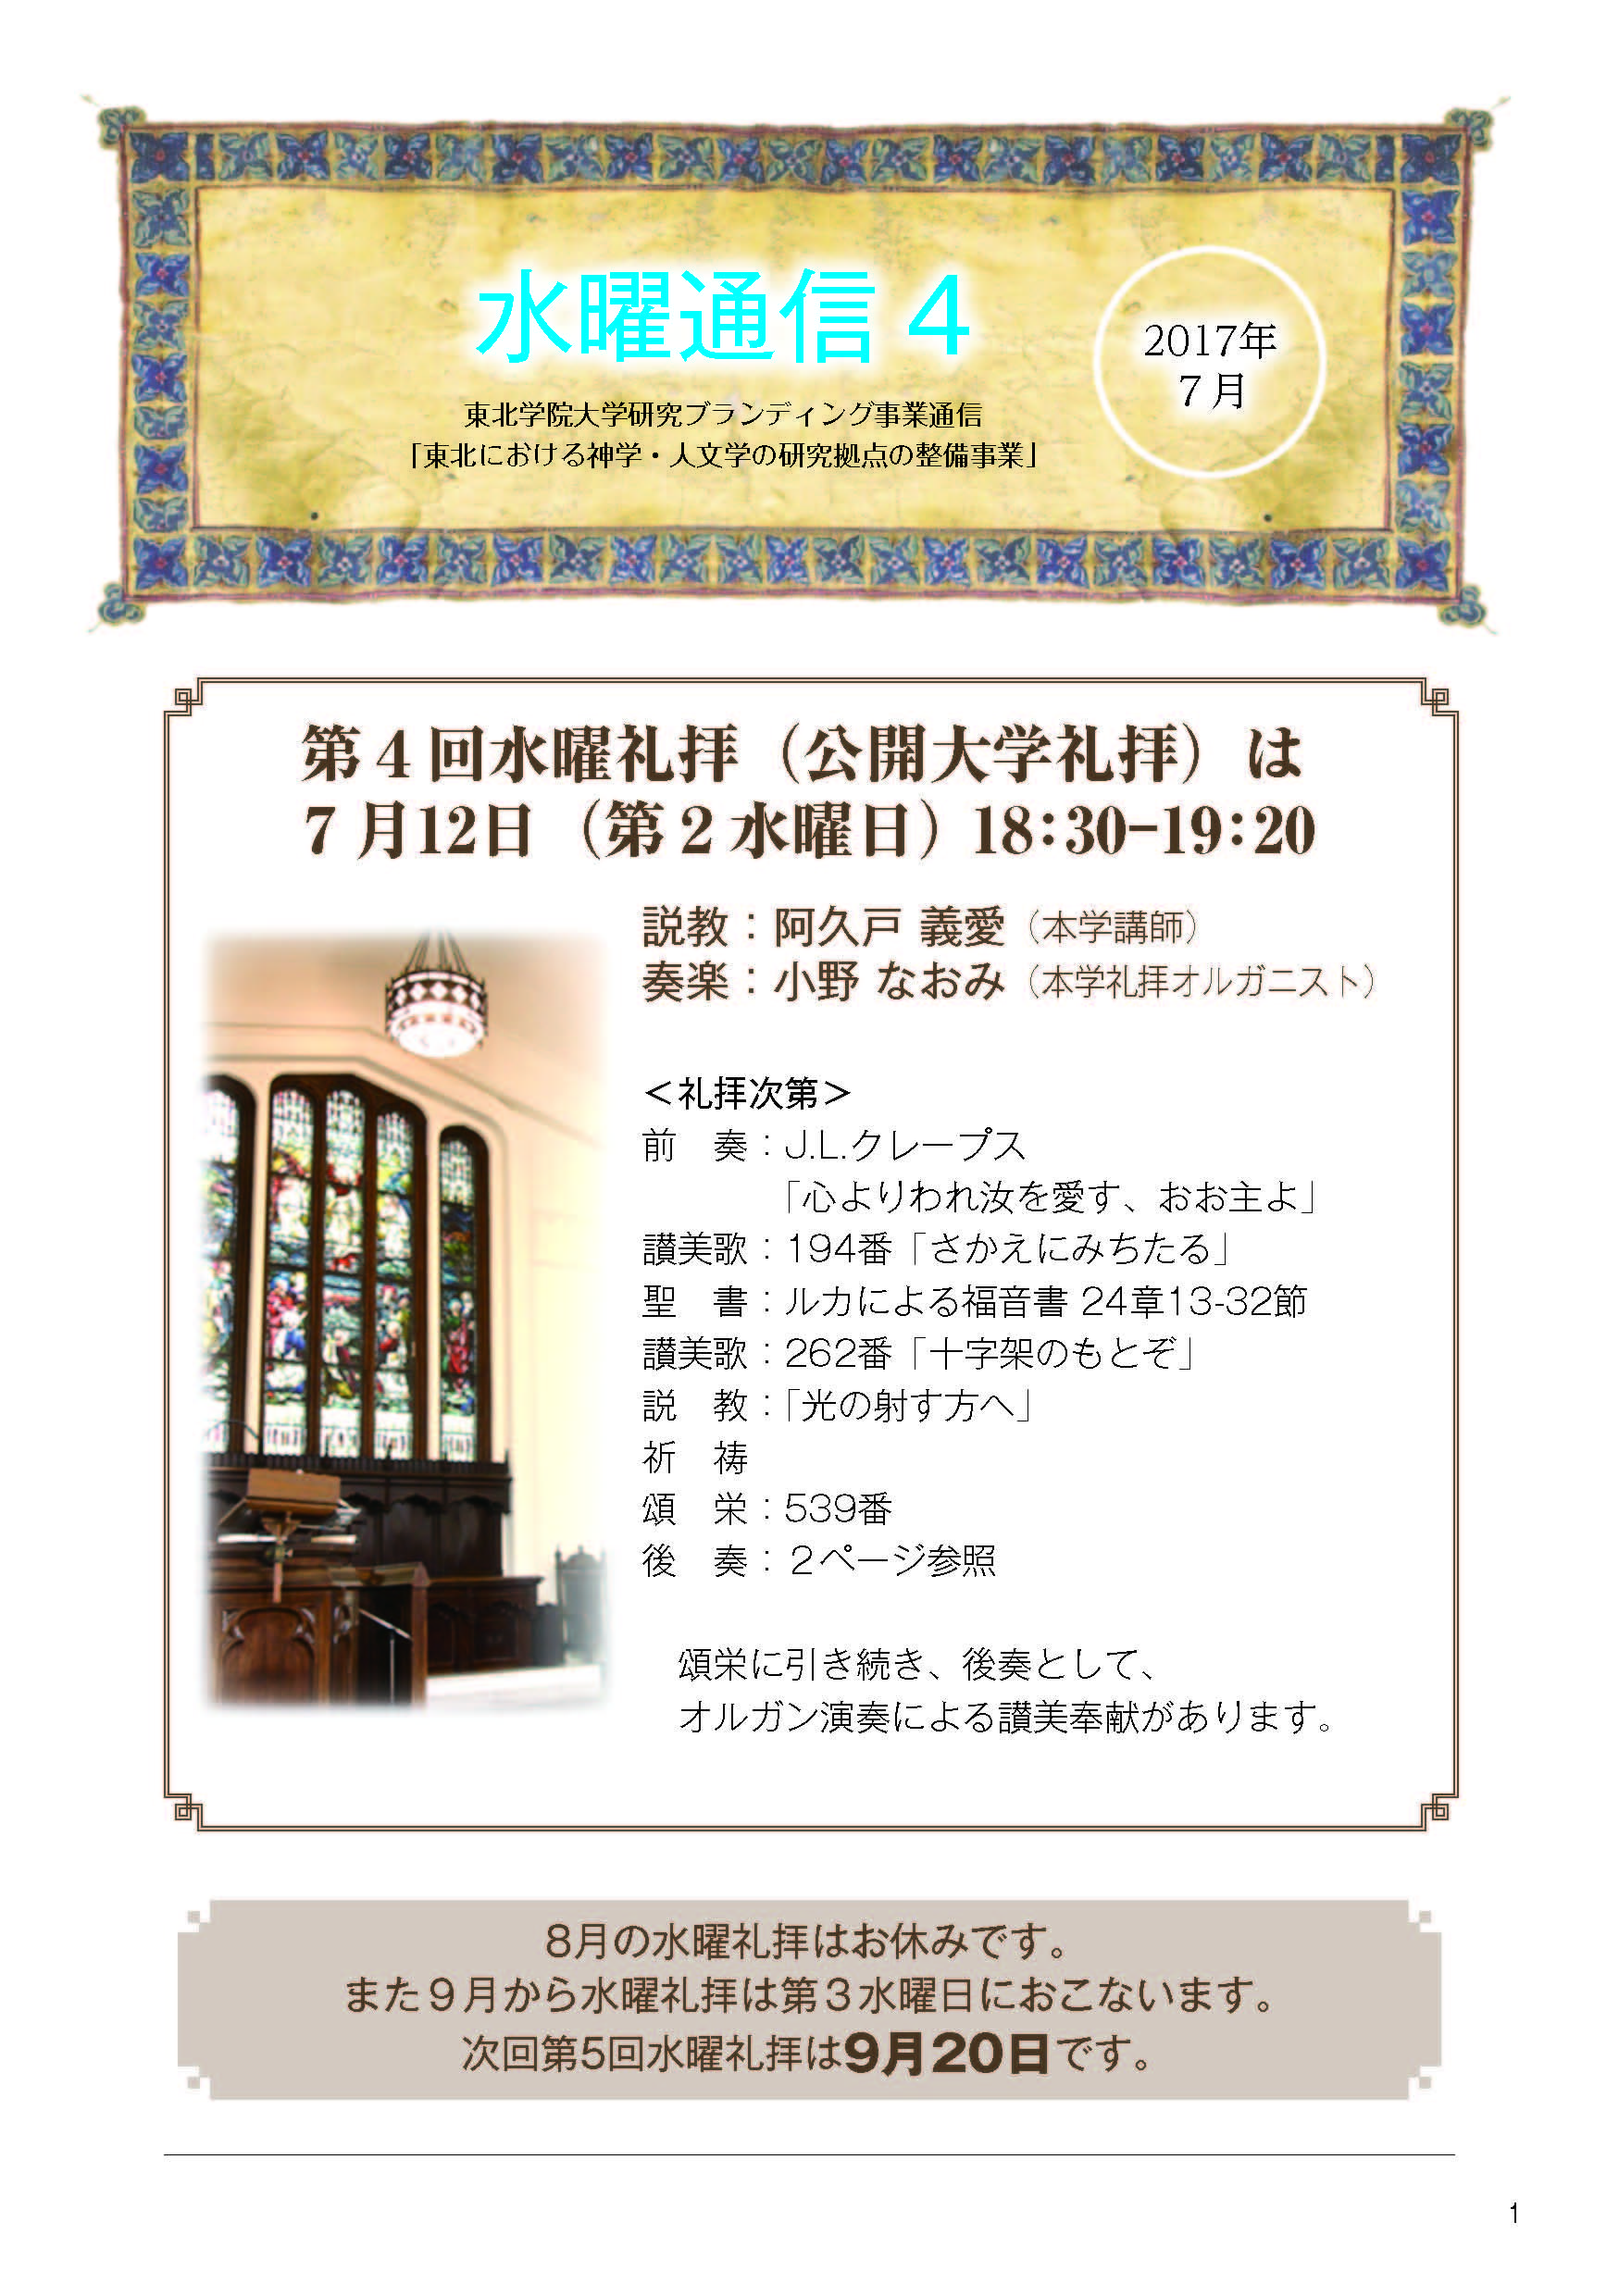 https://www.tohoku-gakuin.ac.jp/info/content/170710-1_1.jpg